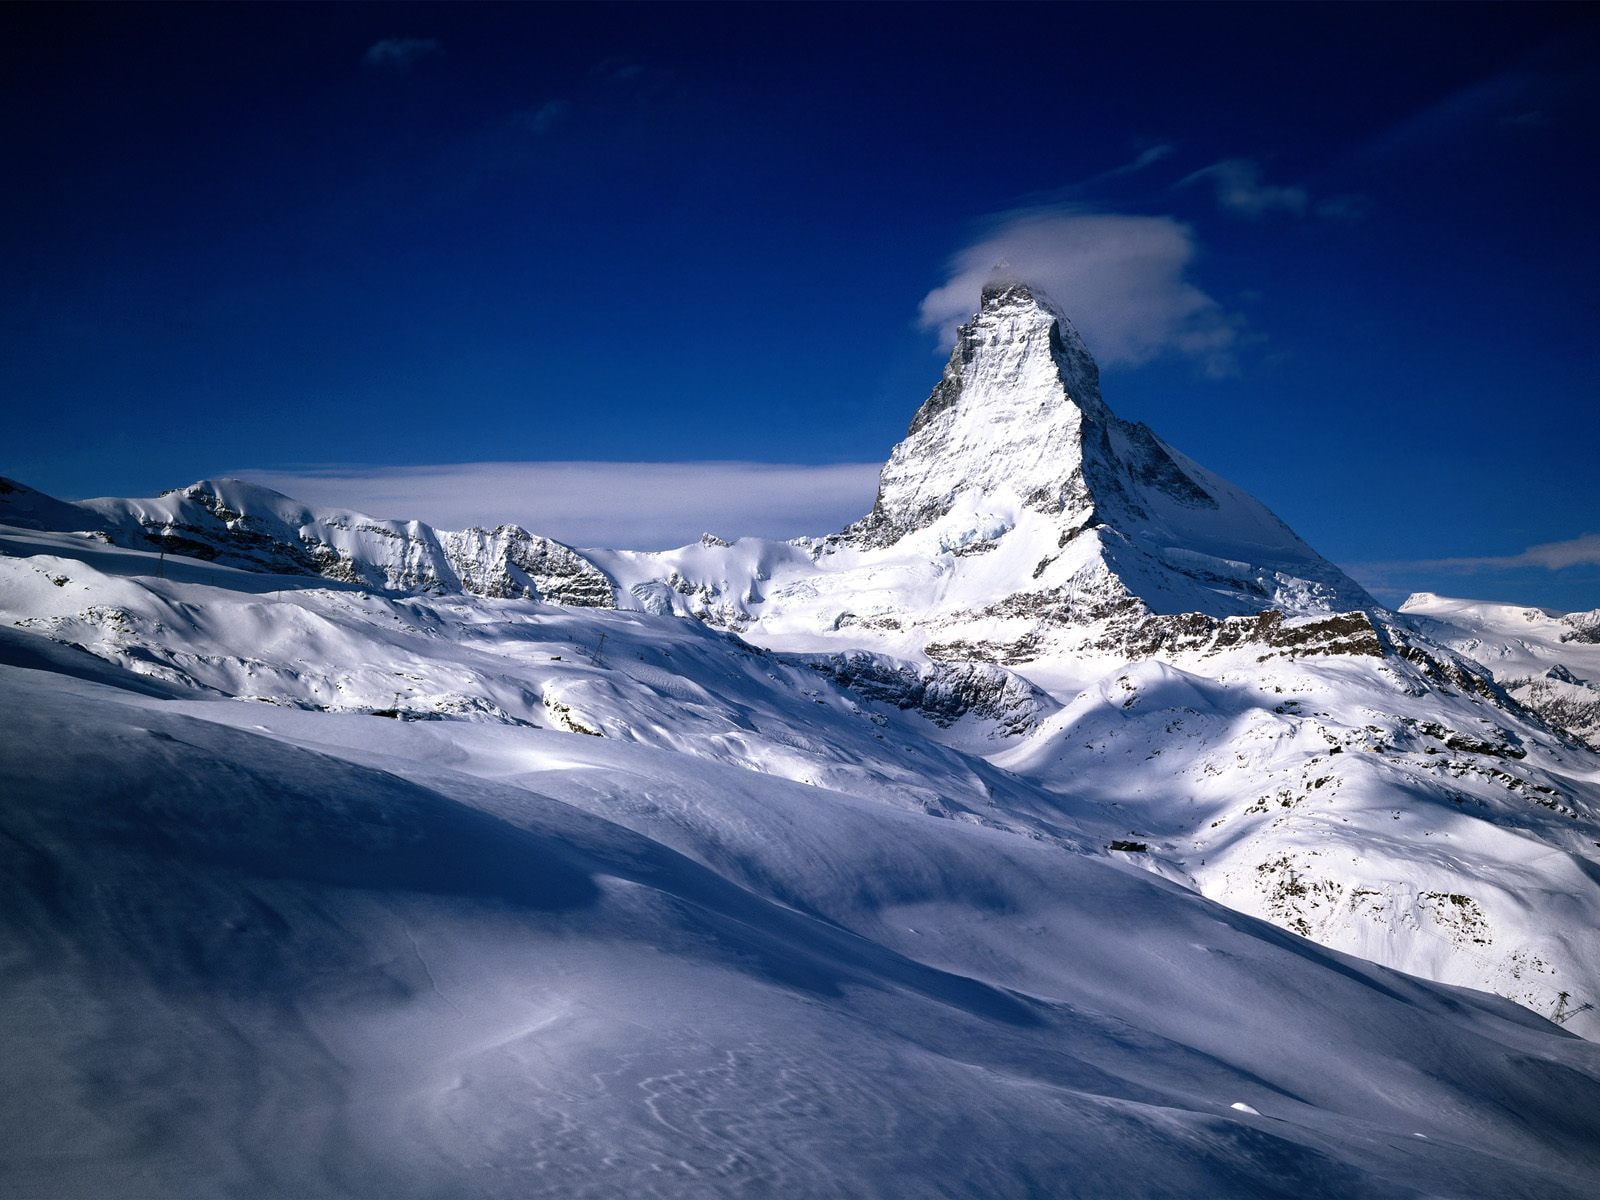 Matterhorn Valais Switzerland HD, snowy mountains photo, nature